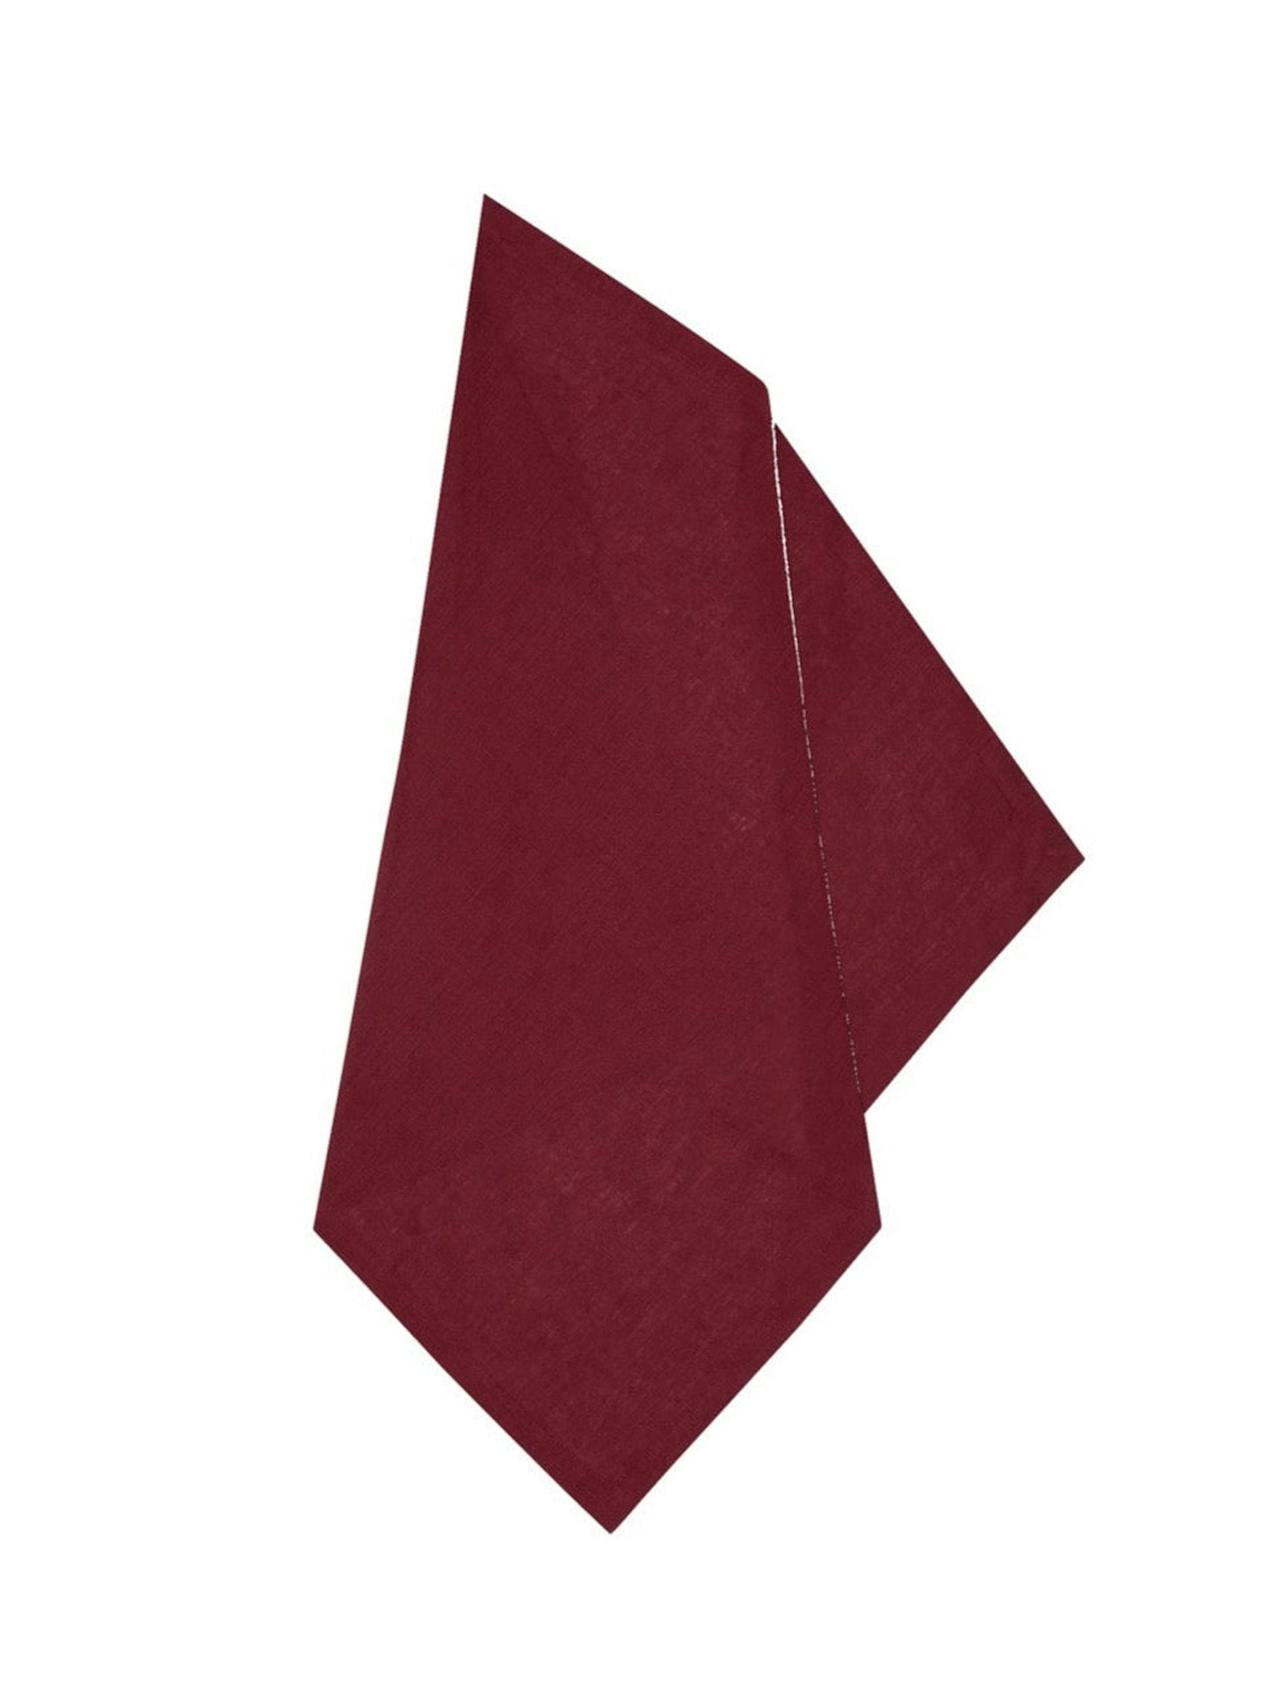 Deep red napkins, set of 4